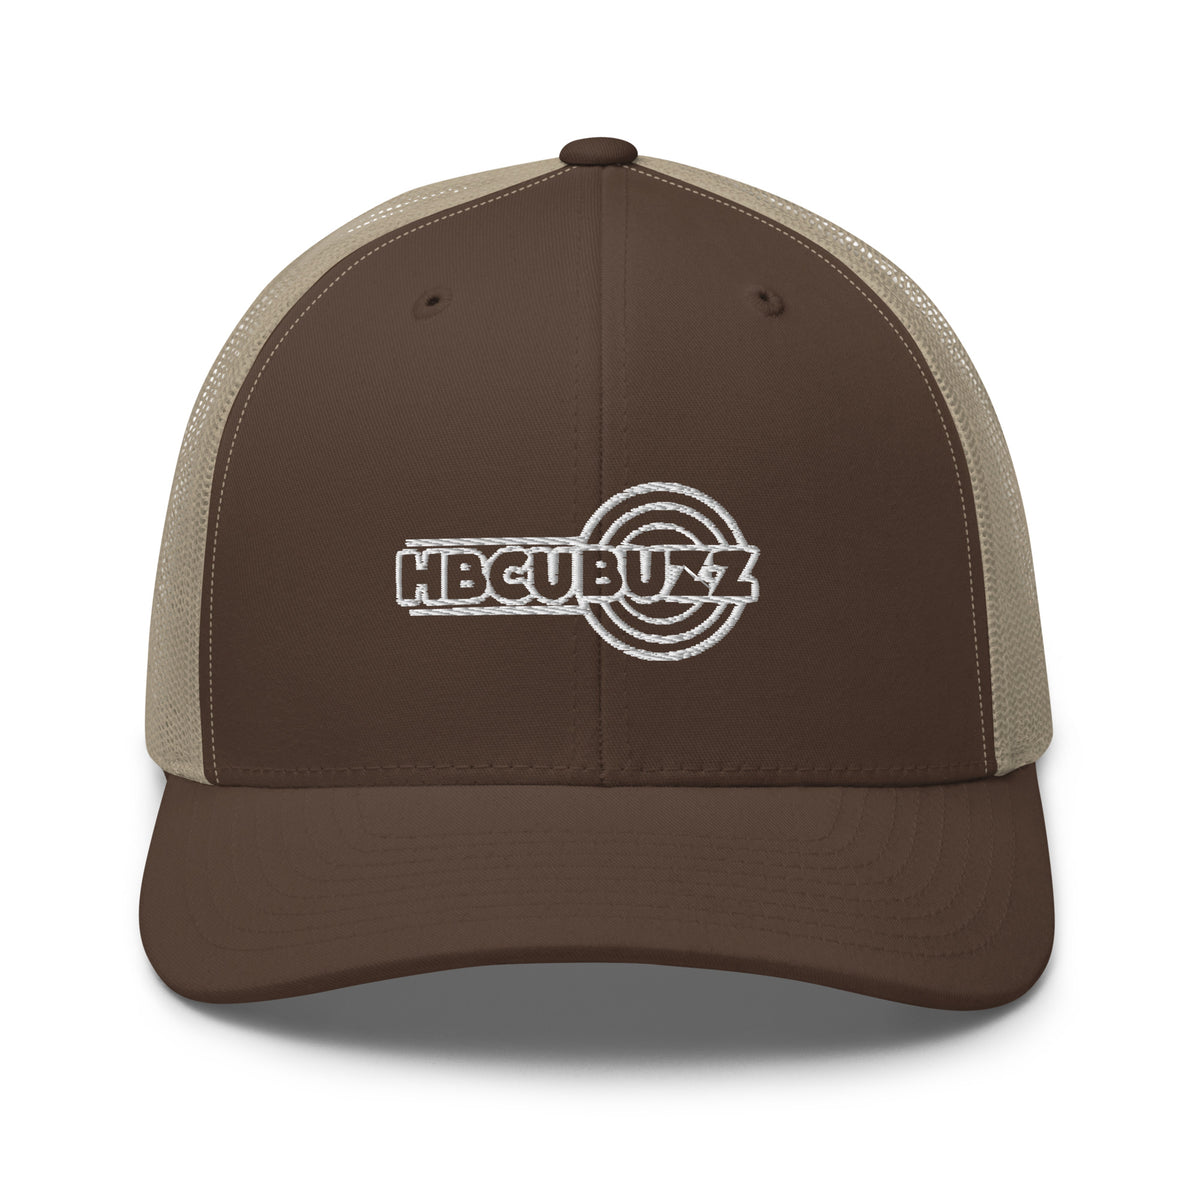 HBCU Buzz Trucker Cap - HBCU Buzz Shop